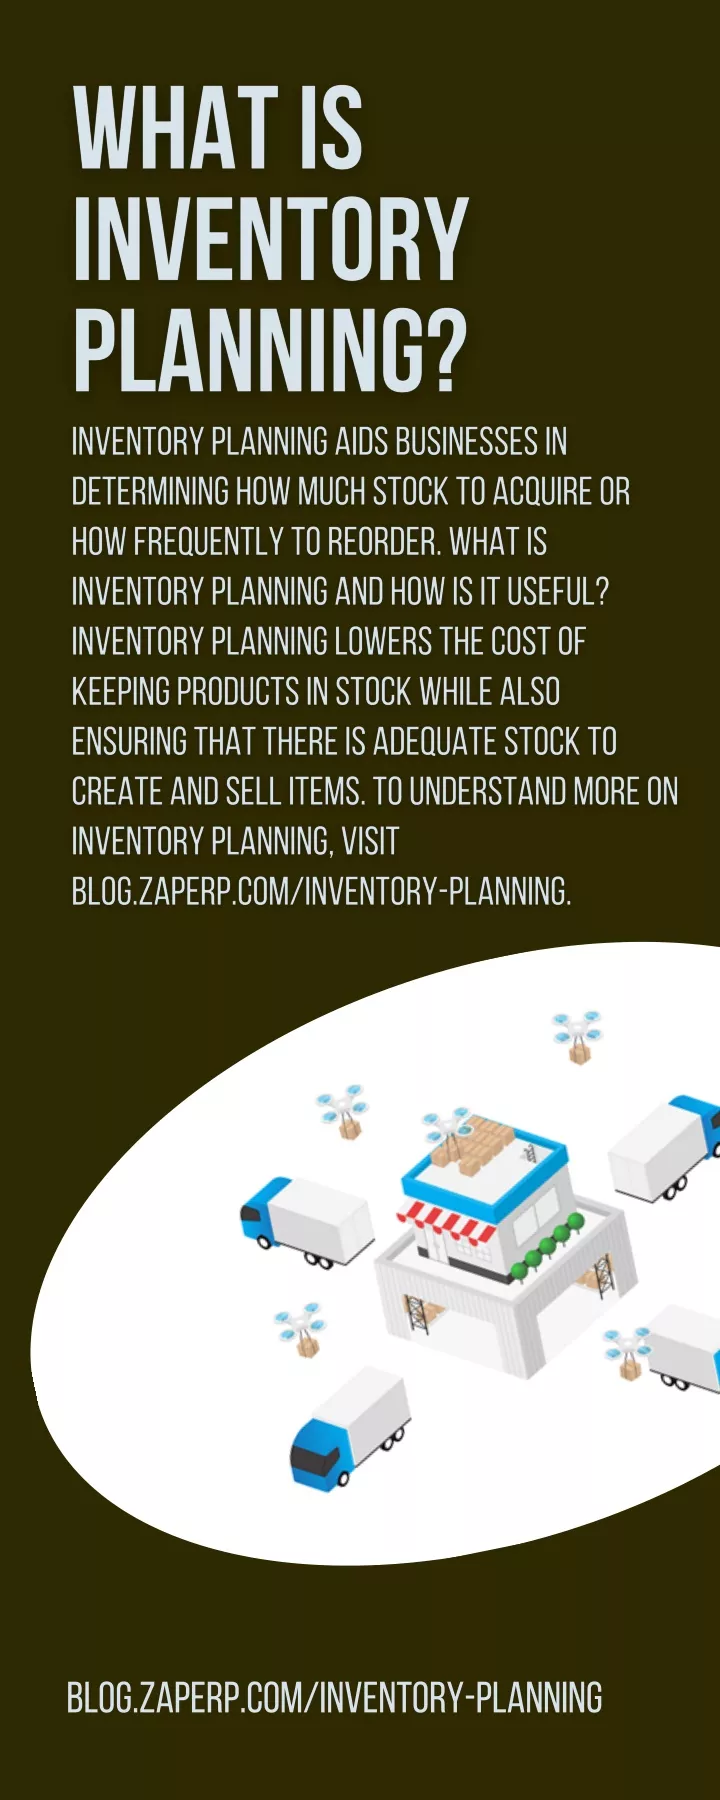 blog zaperp com inventory planning